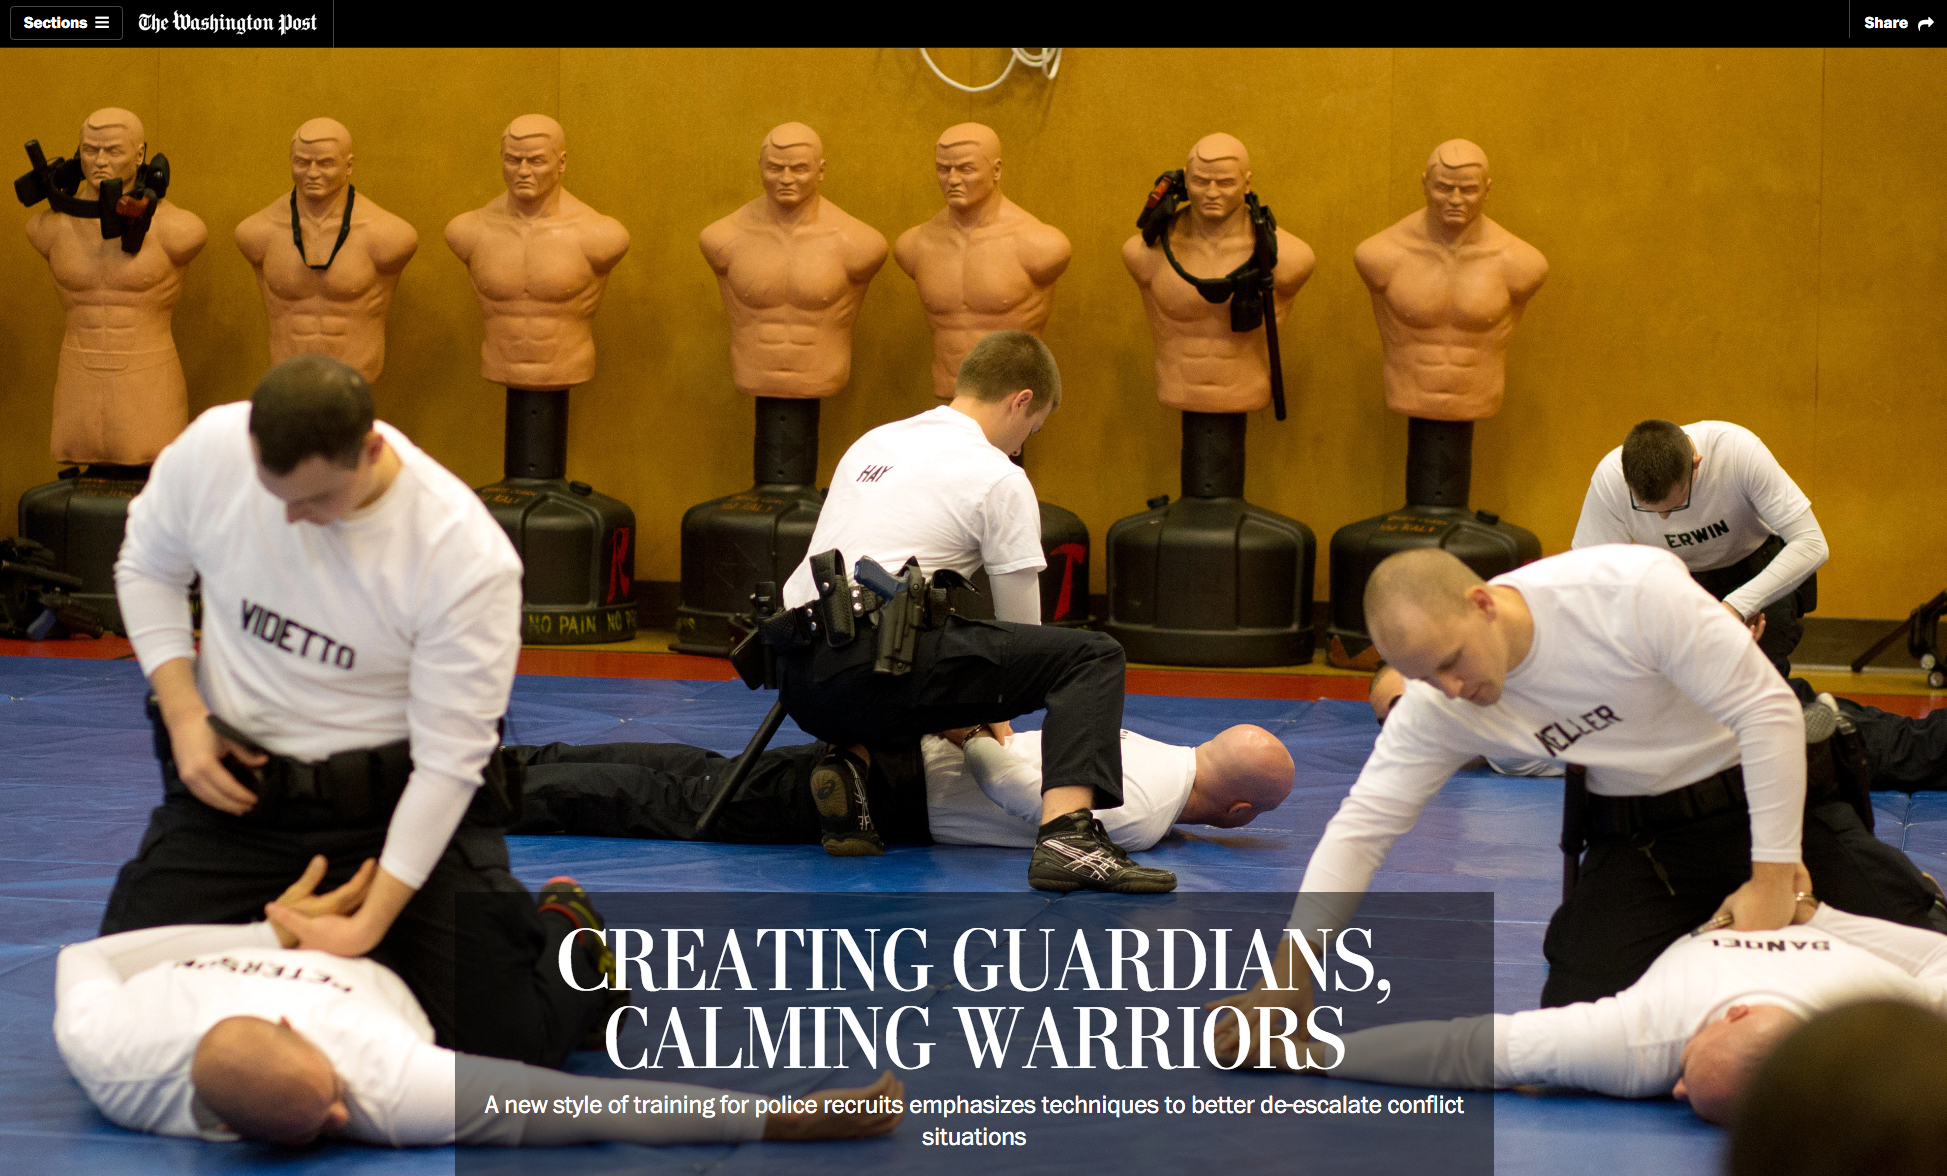 Creating Guardians, Calming Warriors   Photos for The Washington Post, December 10, 2015.